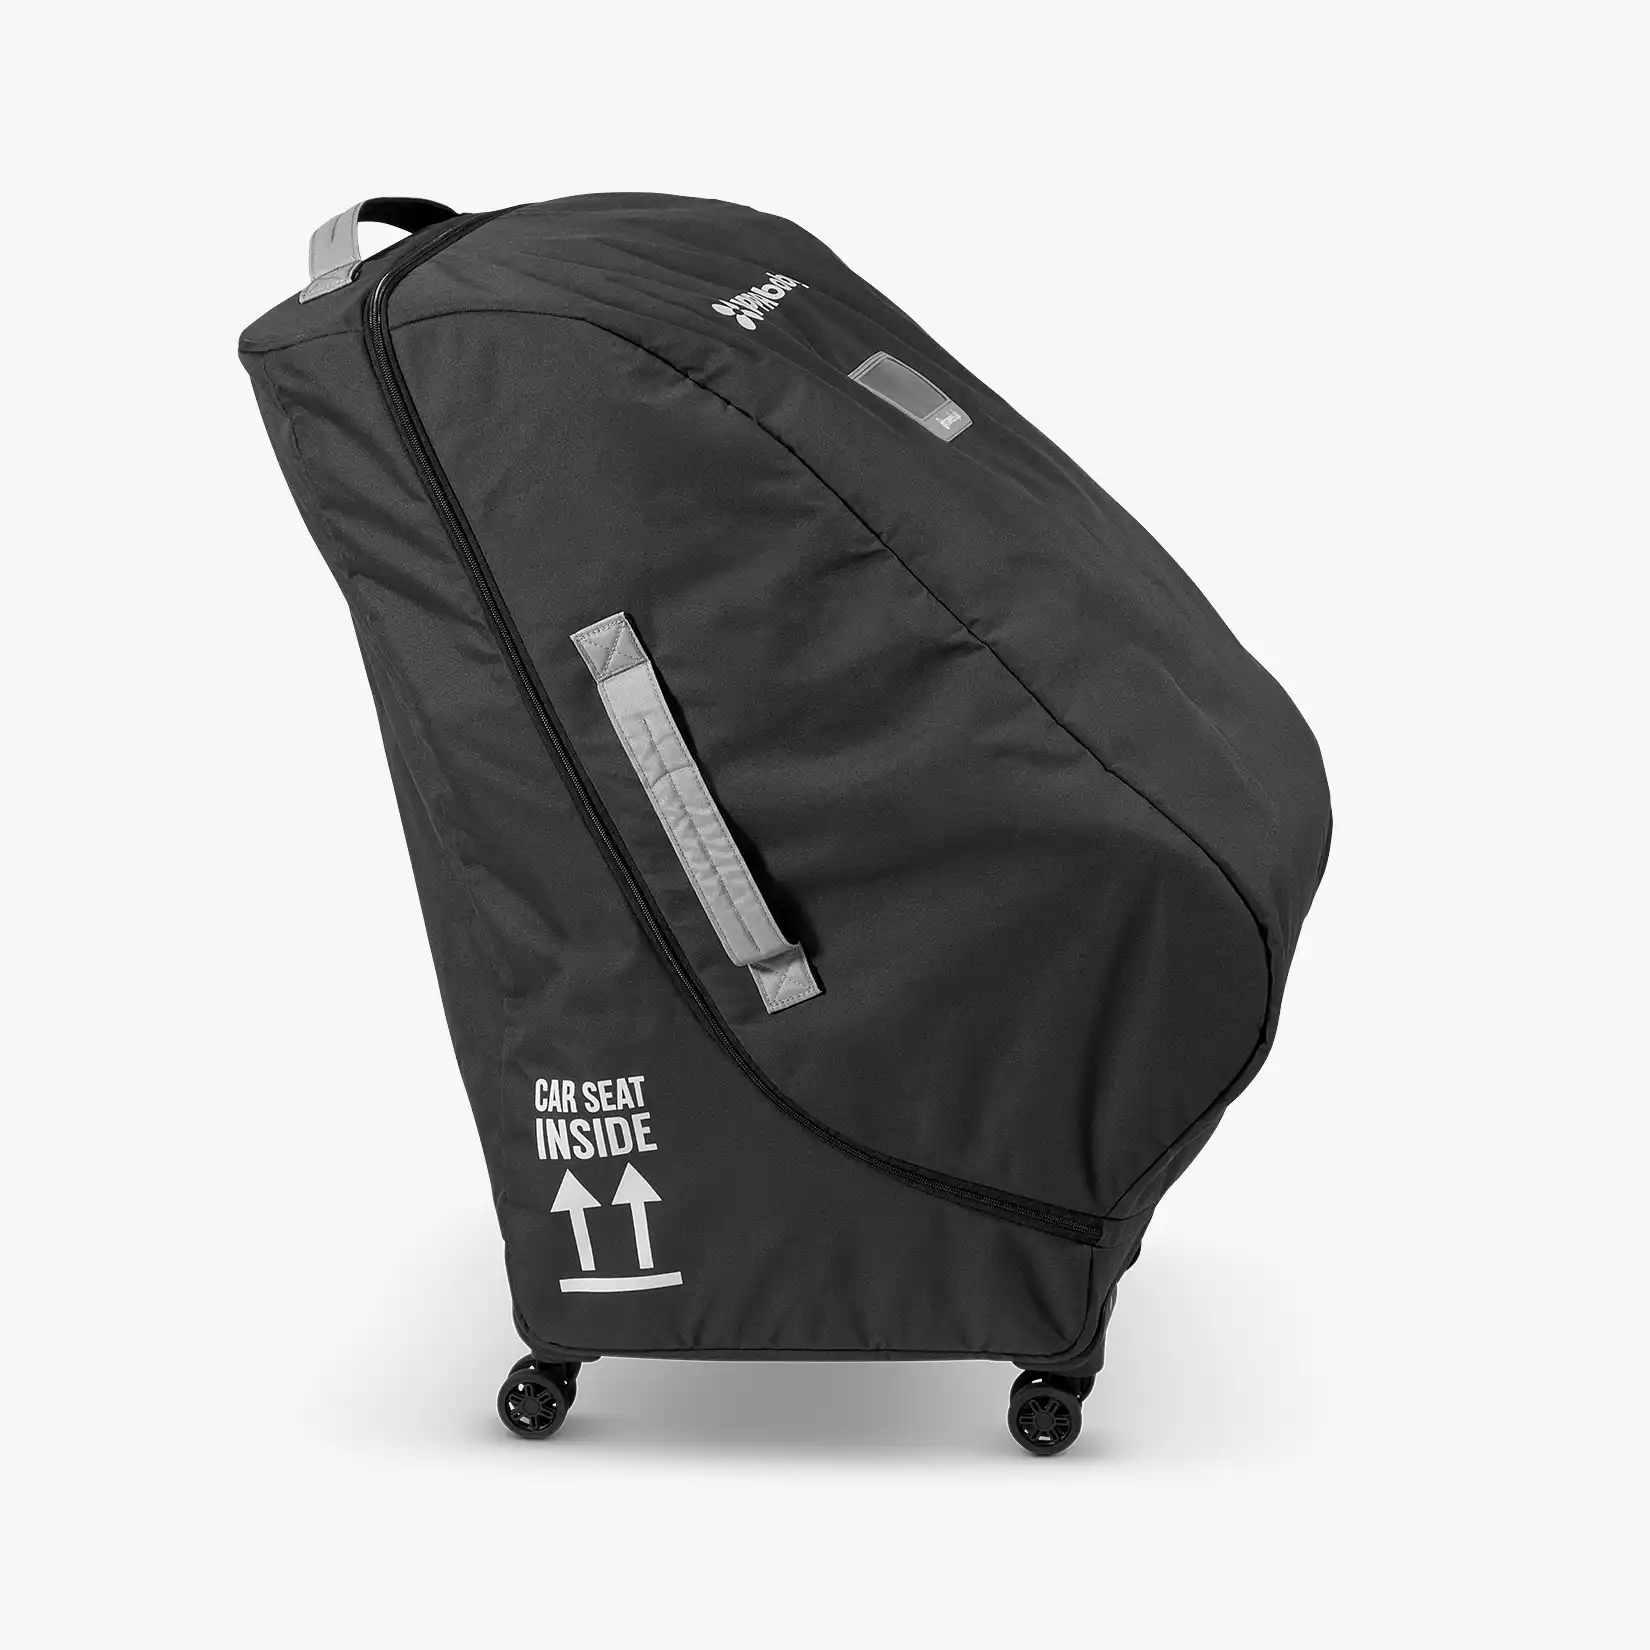 J.L. Childress Ultimate Backpack Padded Car Seat Travel Bag - Durable,  Secure, Universal Airport Bag, Black